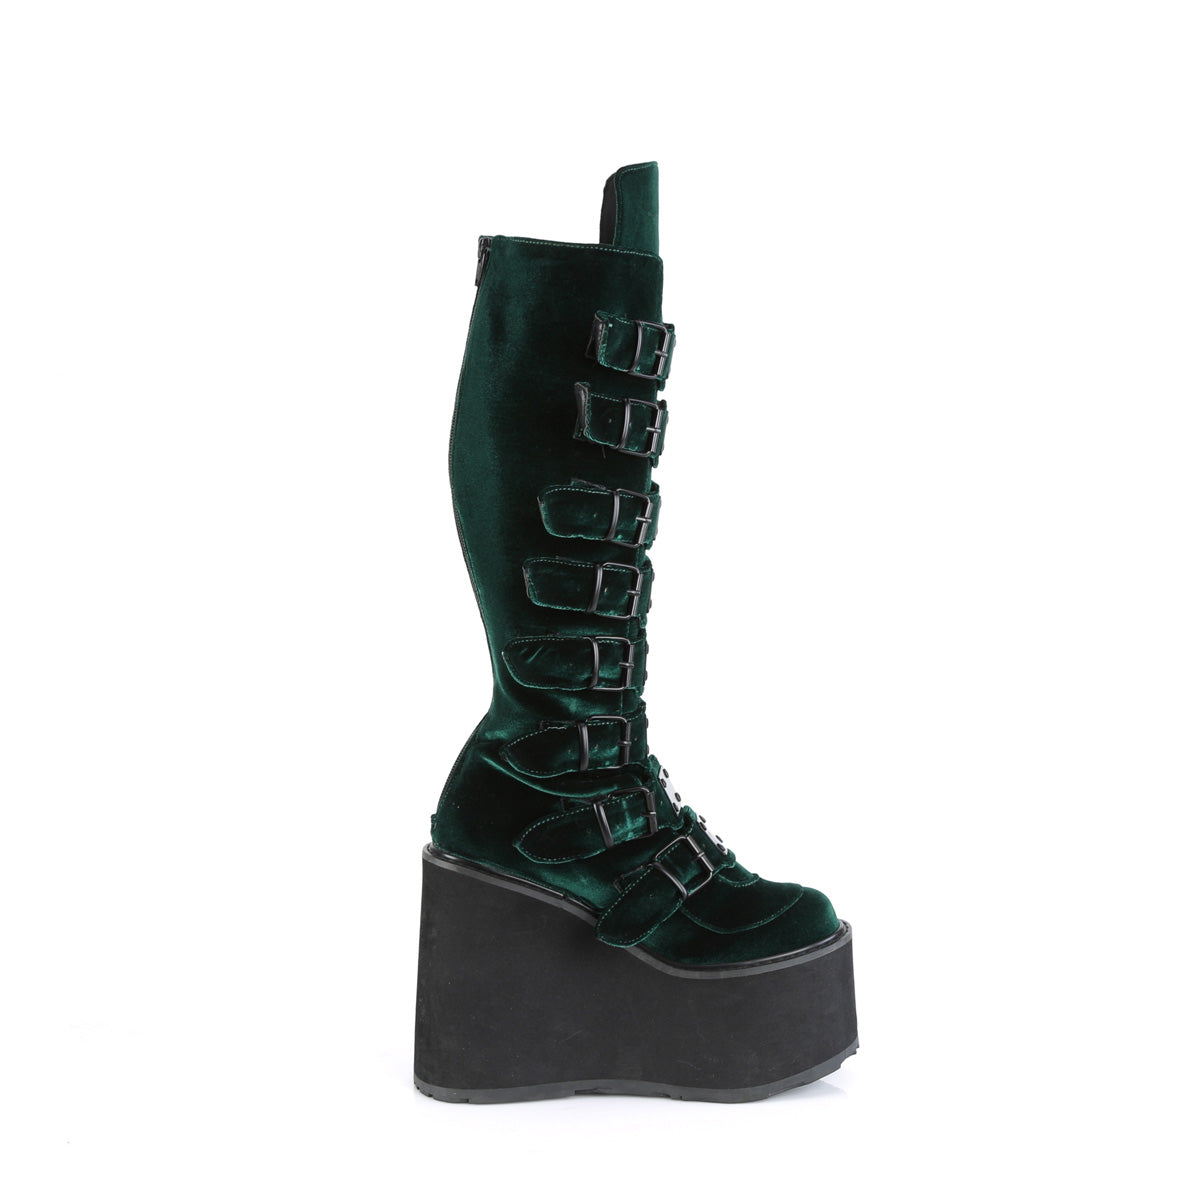 SWING-815 Demonia Emerald Velvet Women's Mid-Calf & Knee High Boots [Demonia Cult Alternative Footwear]